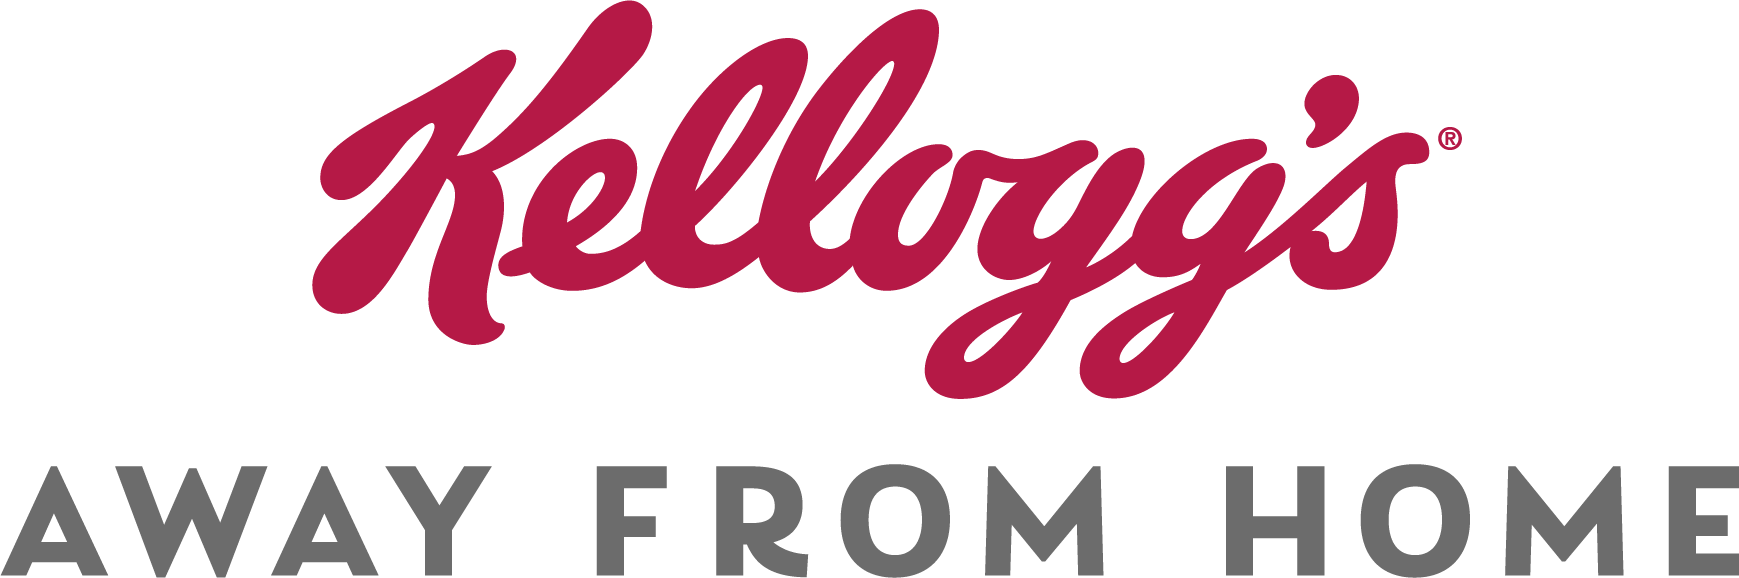 Kelloggs Away From Home Logo